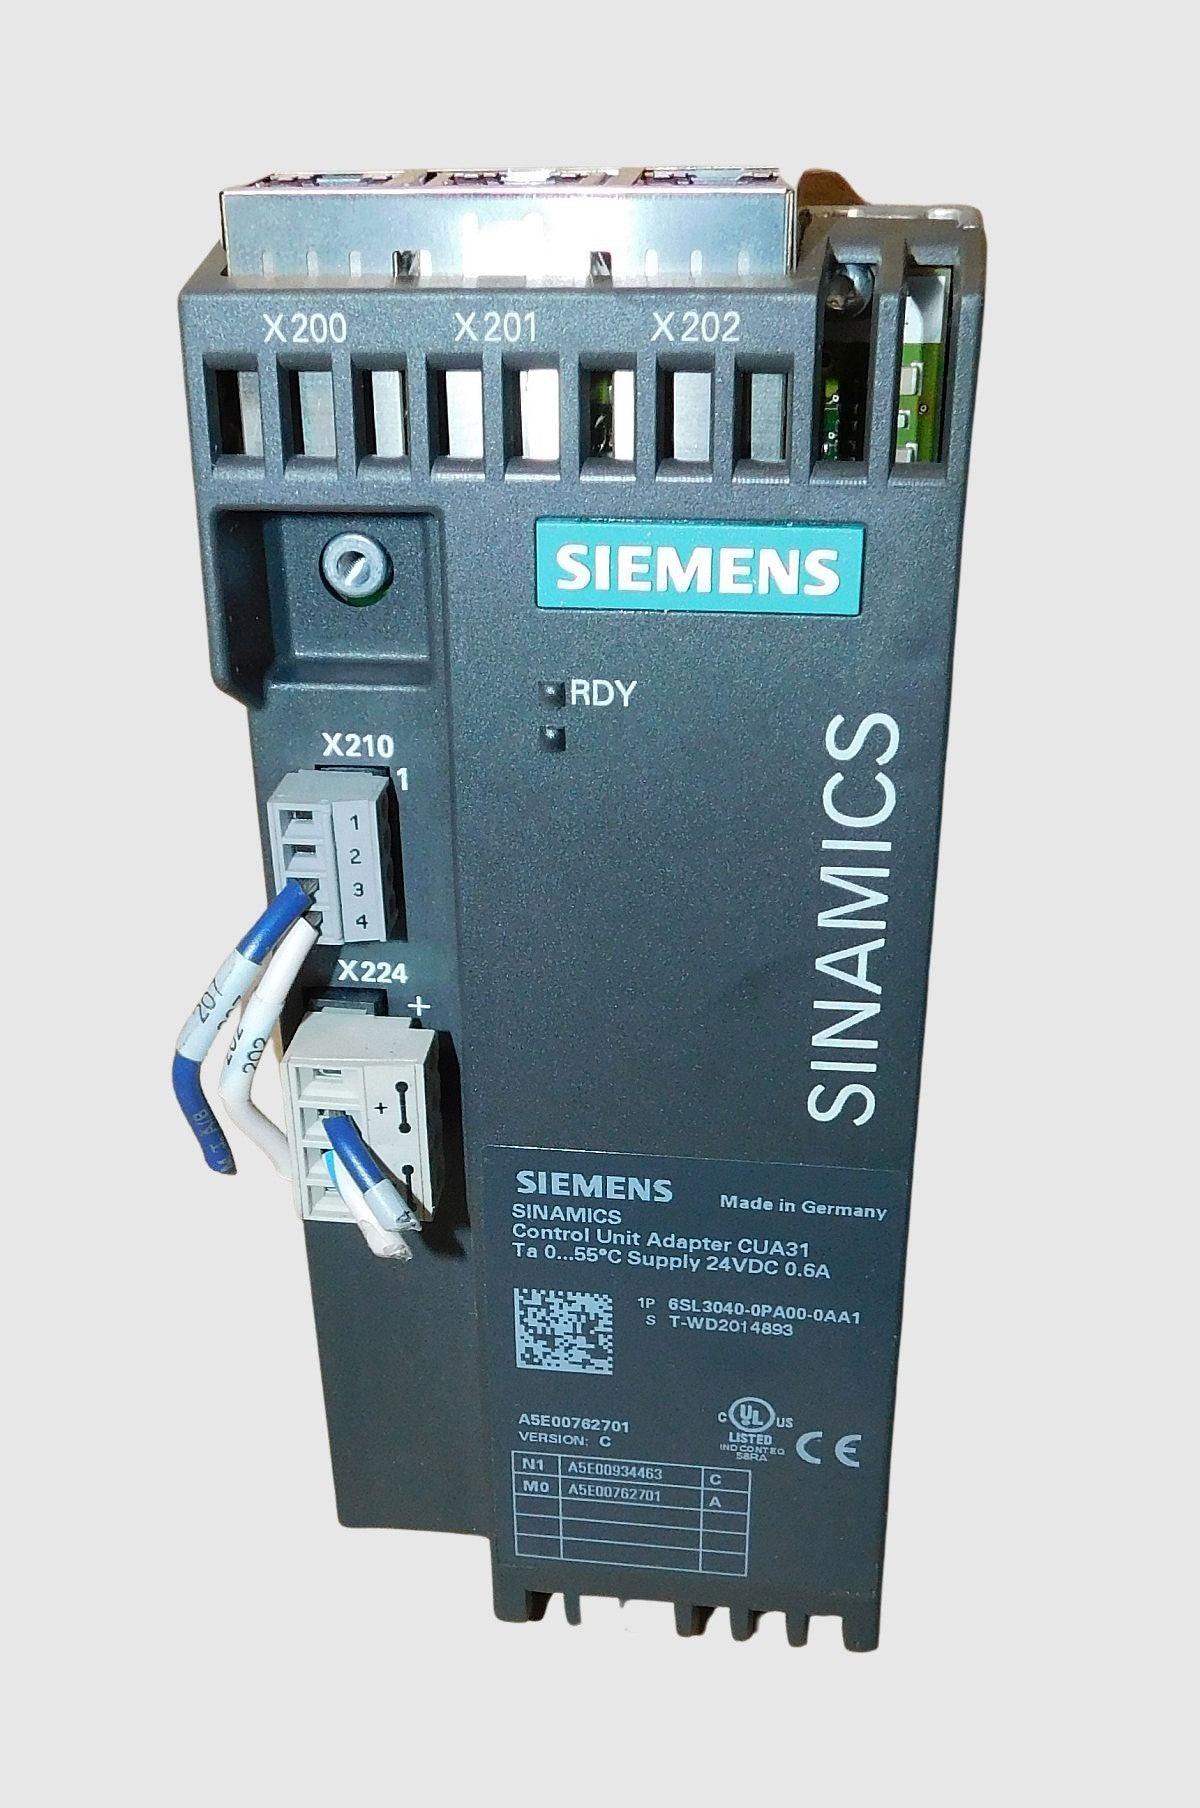 SIEMENS Sinamics 6SL3040-0PA00-0AA1 CUA31 Control Unit  Used